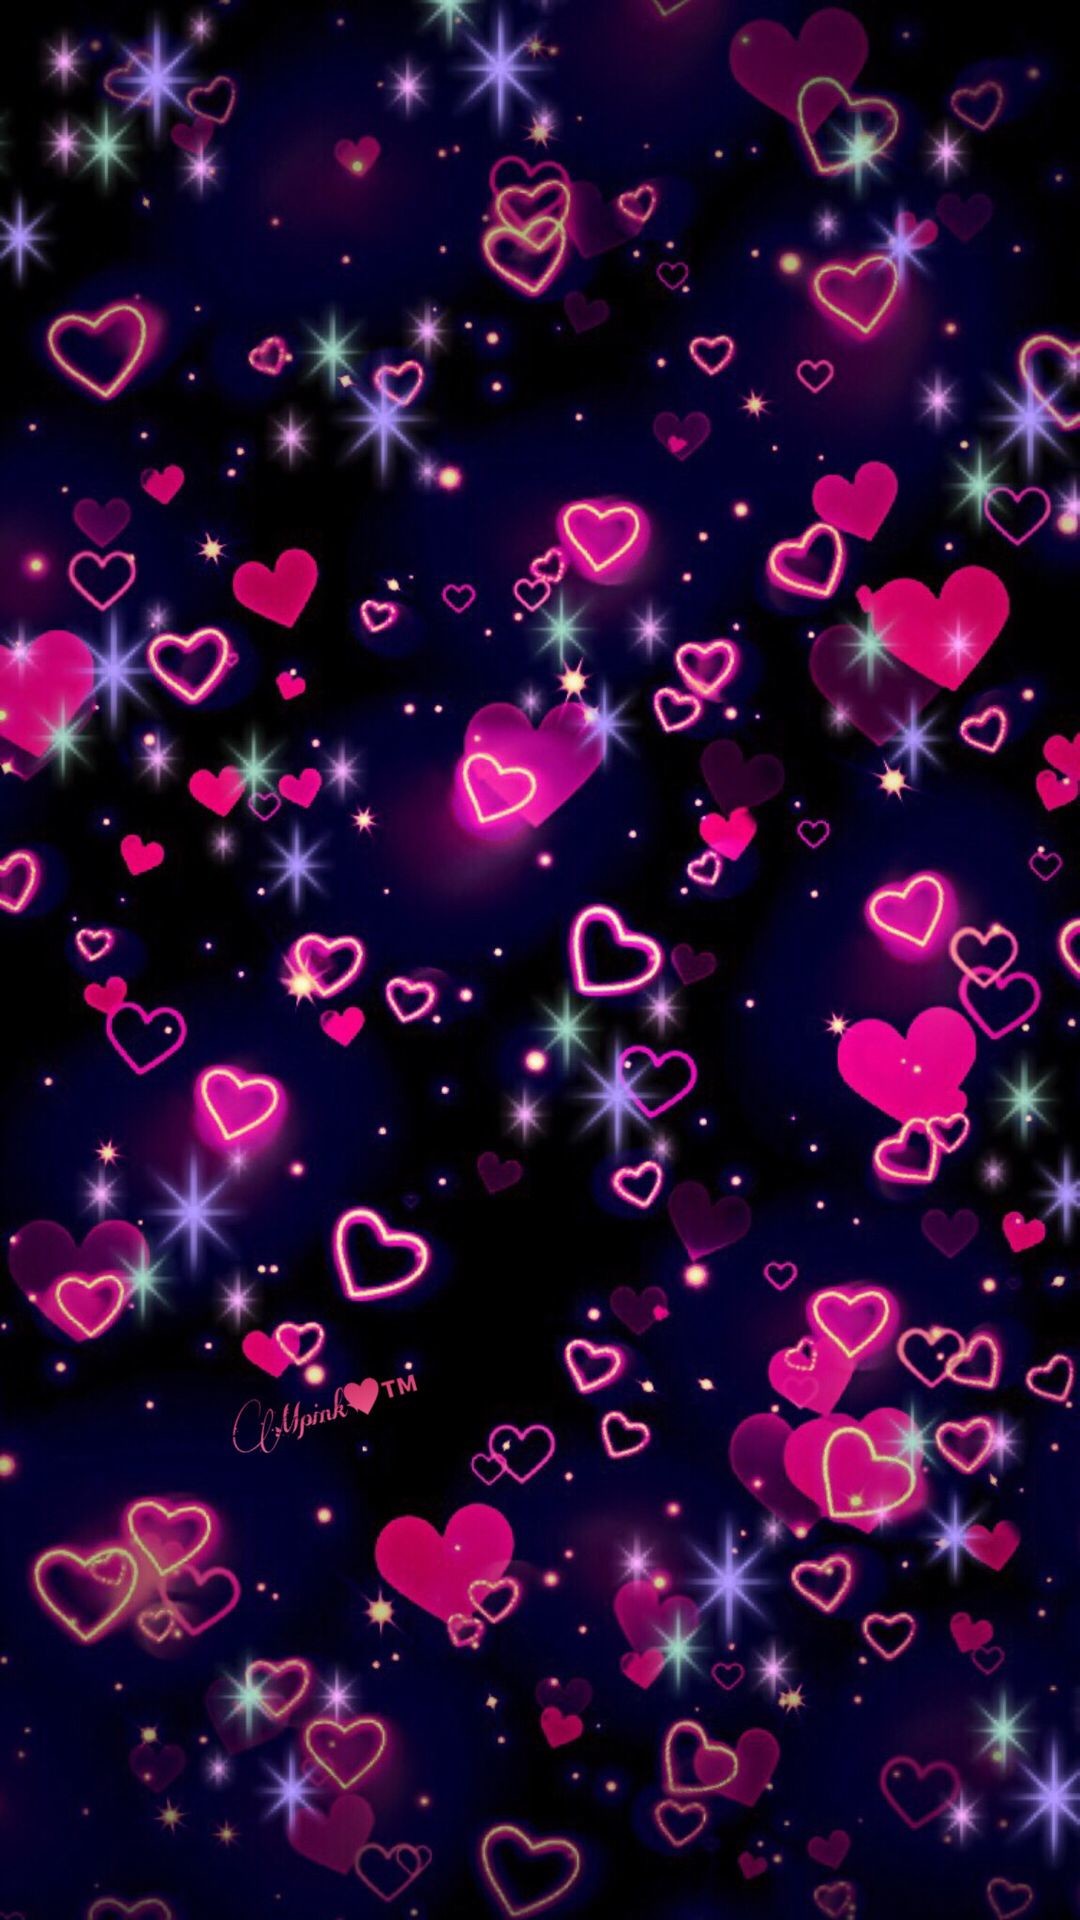 1080x1920 Hearts Neon Wallpaper, Wallpaper For Your Phone, Homescreen Wallpaper, Cute  Wallpaper Backgrounds,